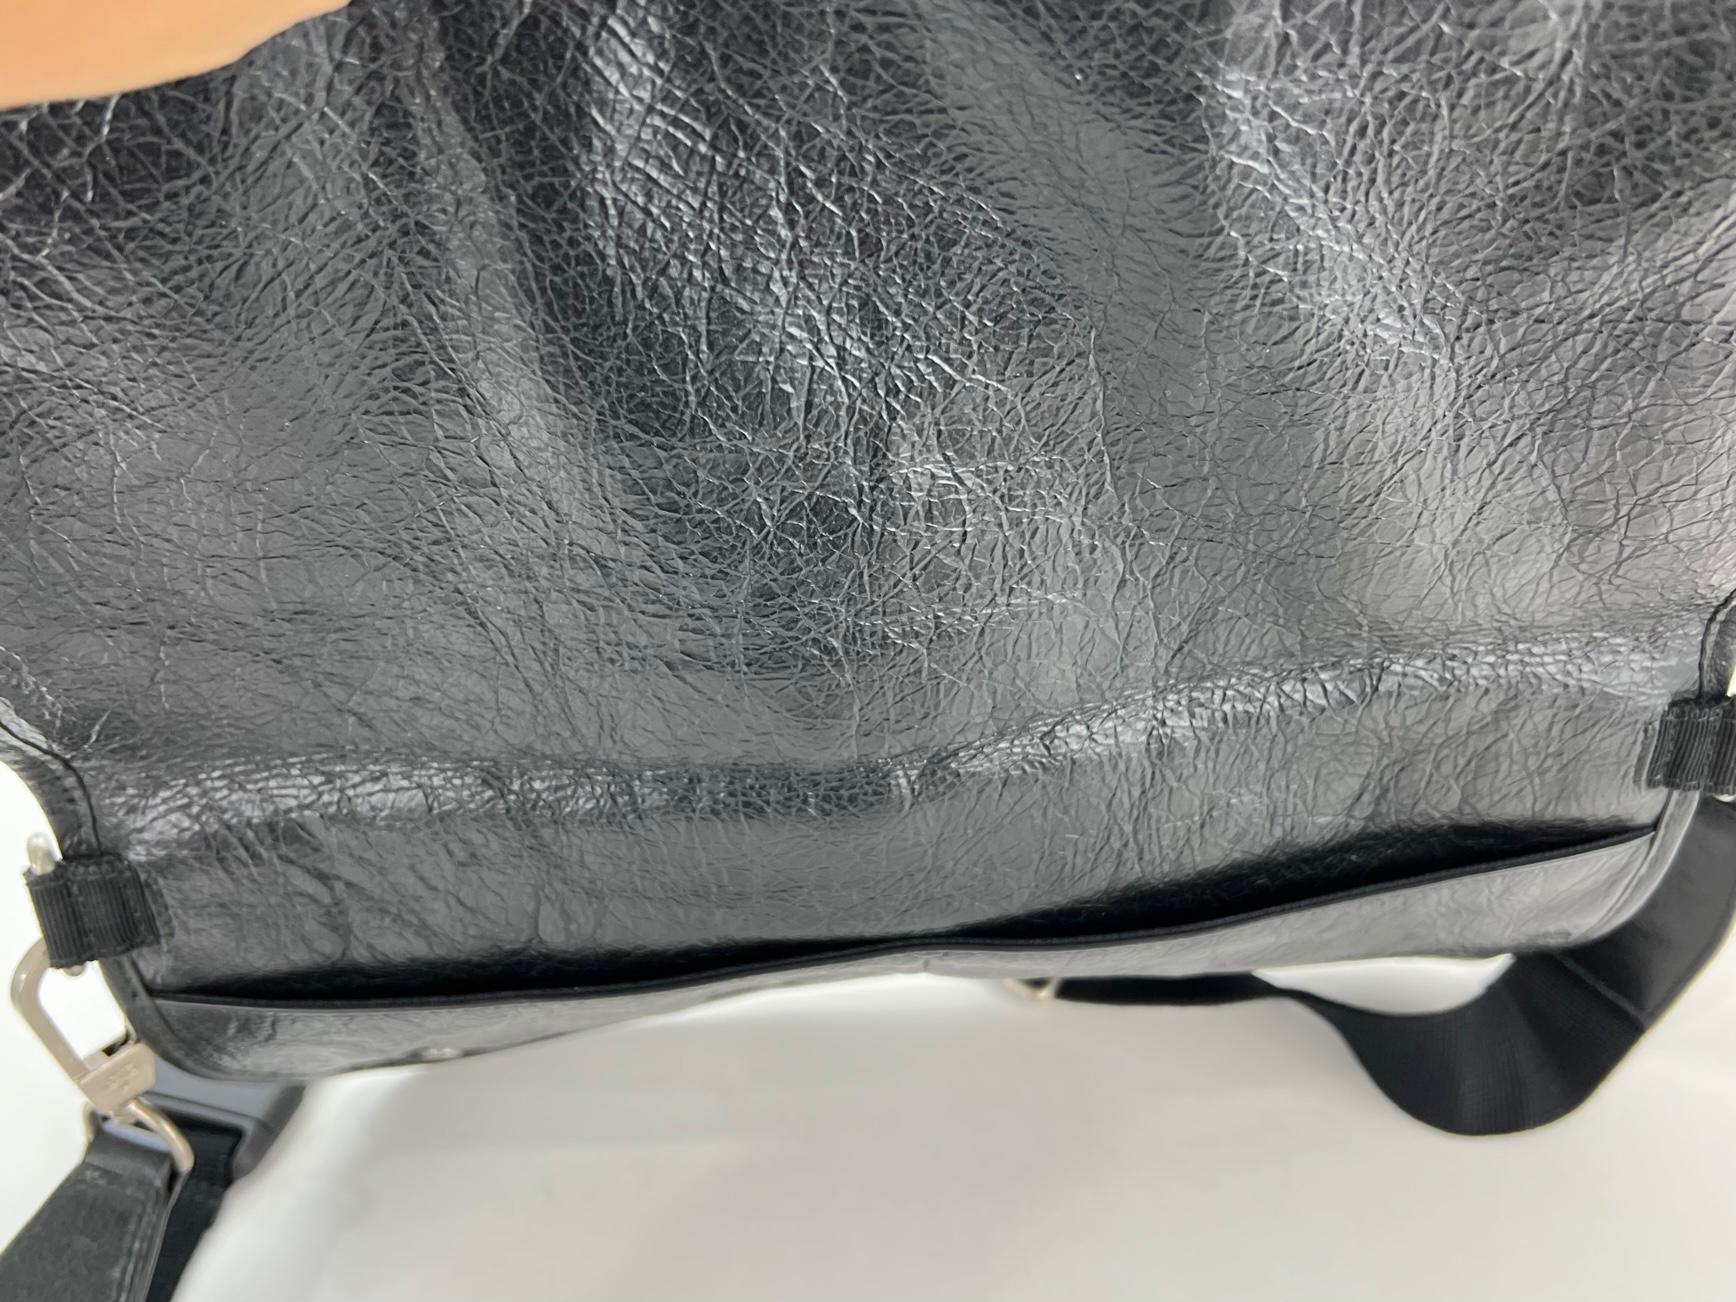 Gucci Messenger Bag Interlocking G Black Leather Crossbody Shoulder Bag In Good Condition For Sale In Freehold, NJ